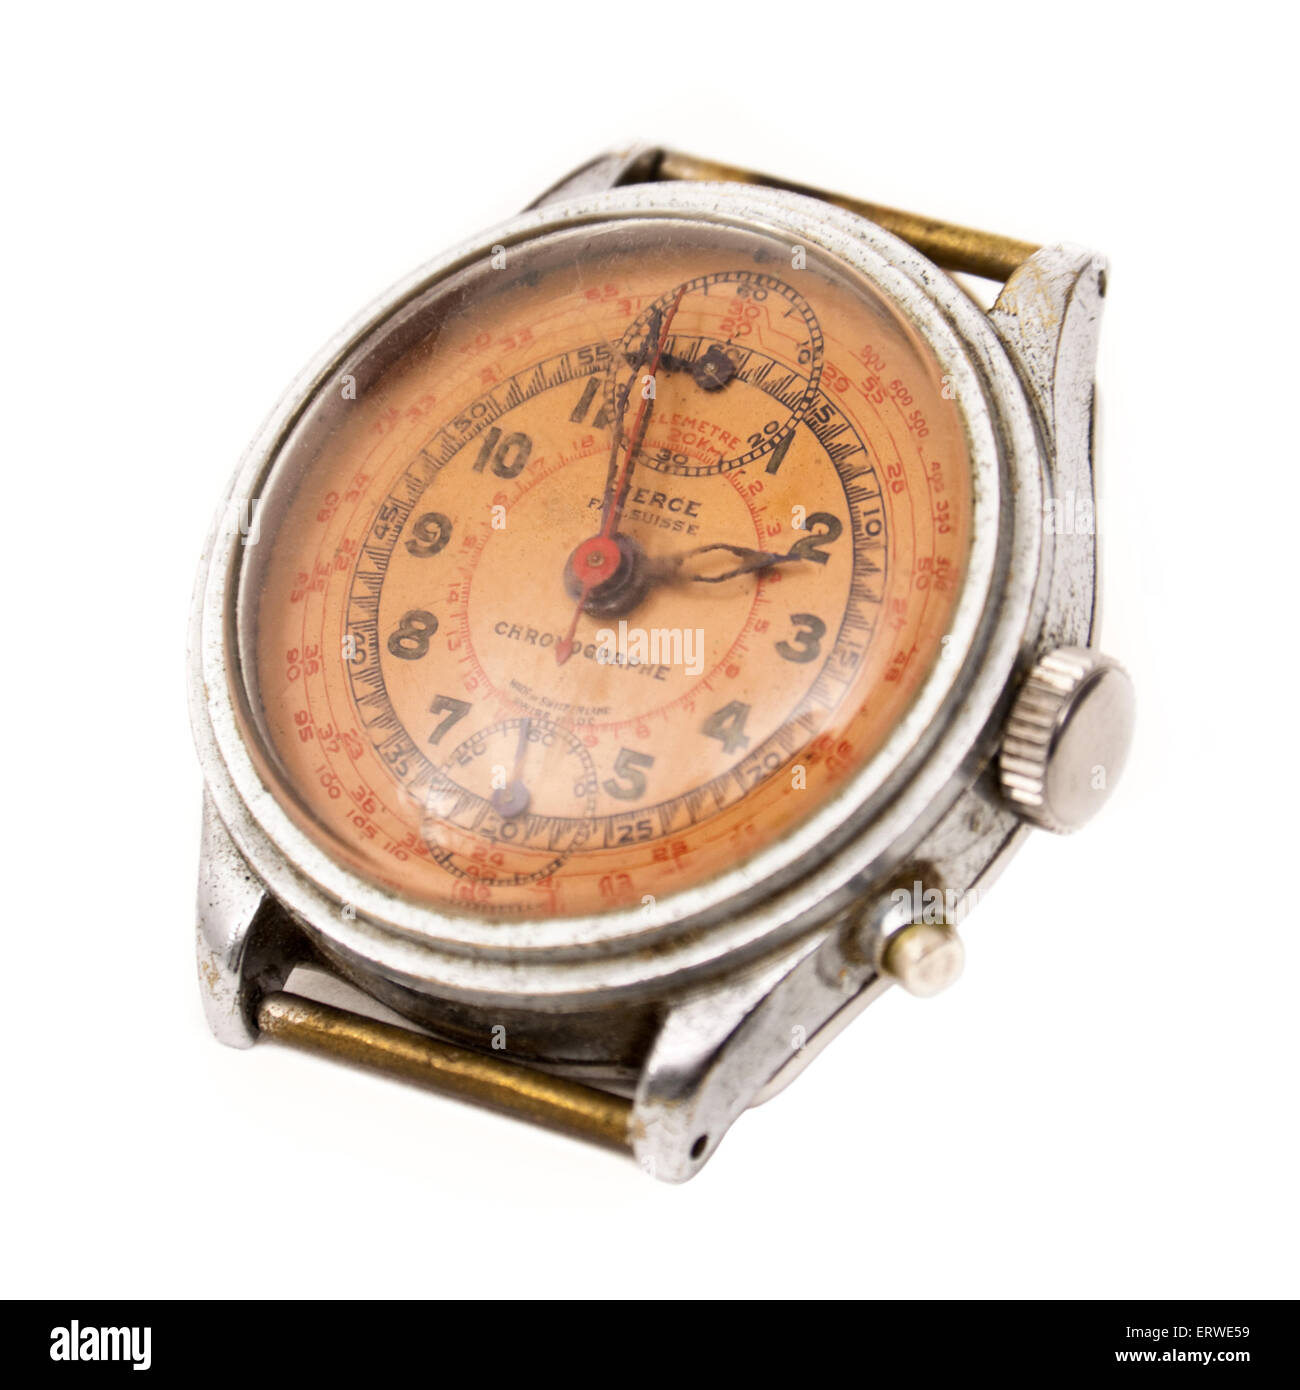 Vintage 1940's Swiss chronograph wristwatch by Pierce. Stock Photo